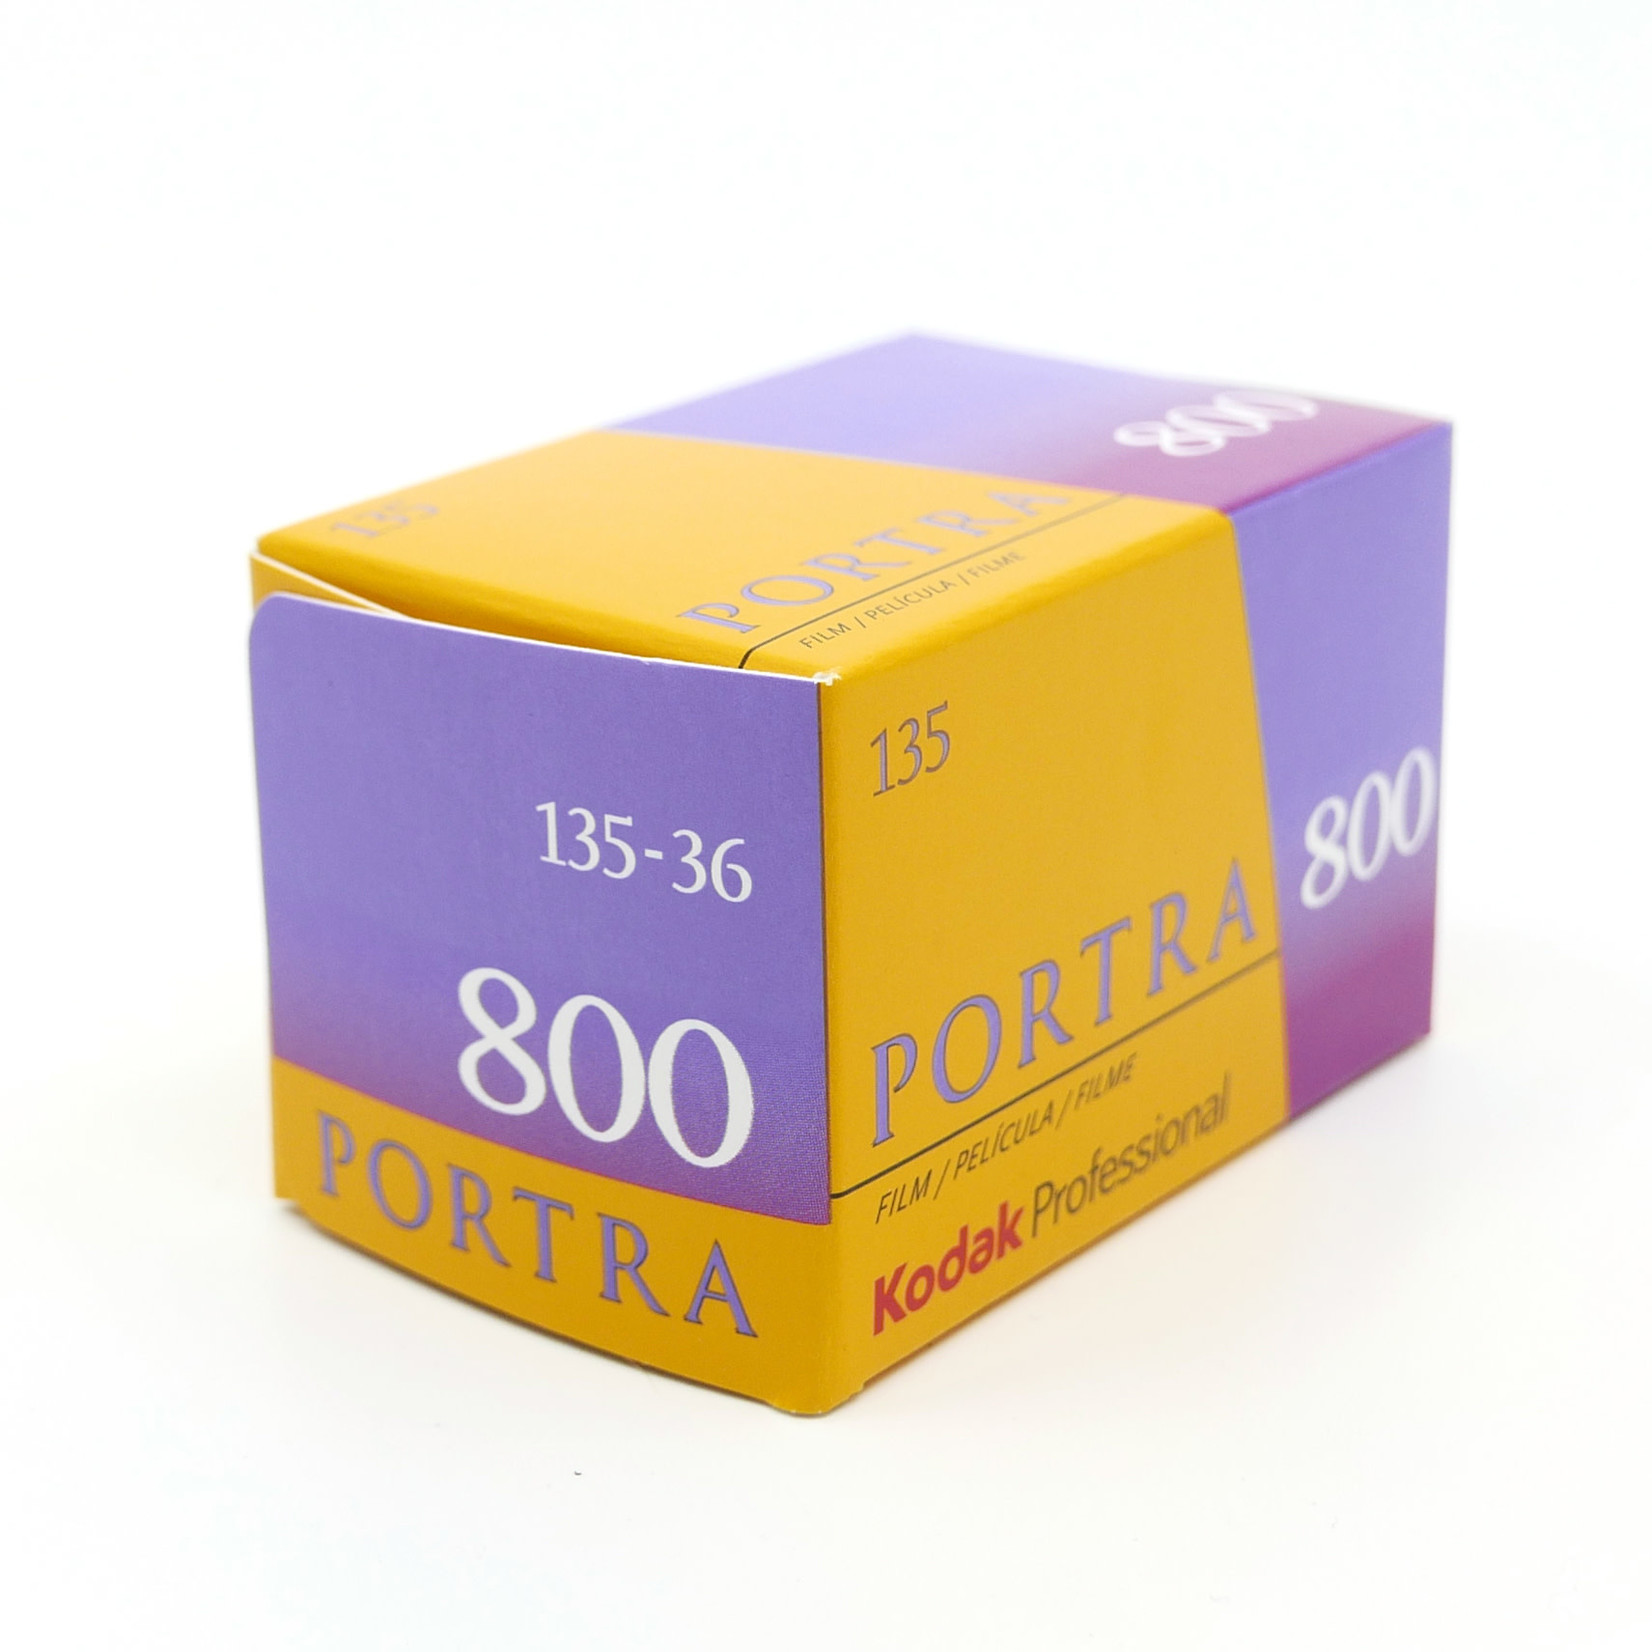 Kodak Kodak Portra 800 135-36